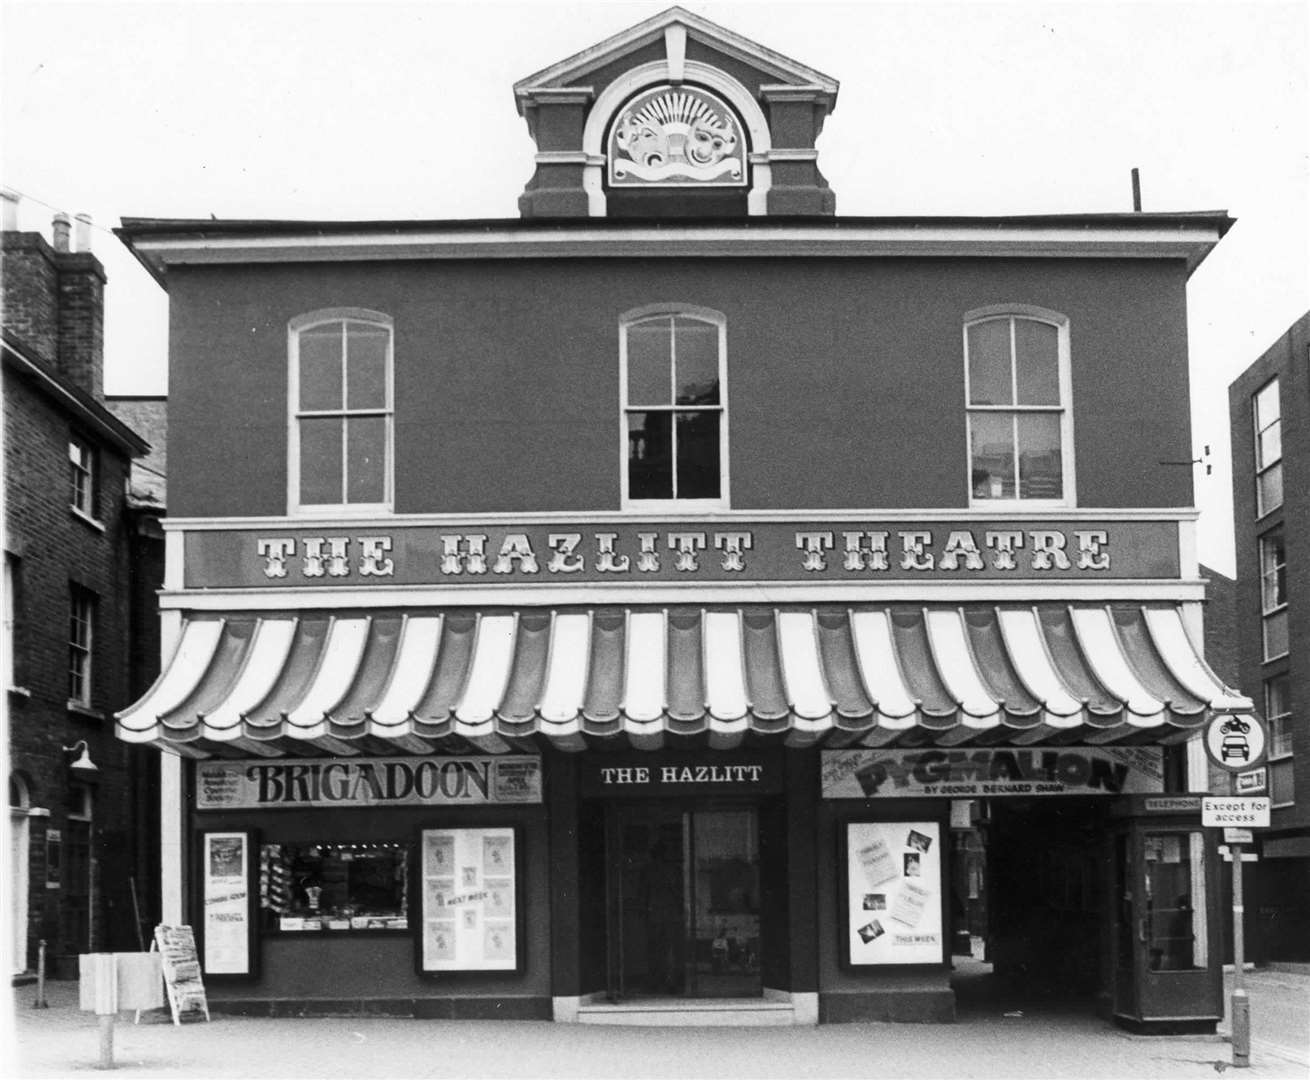 The Hazlitt Theatre in Maidstone, pictured in 1987